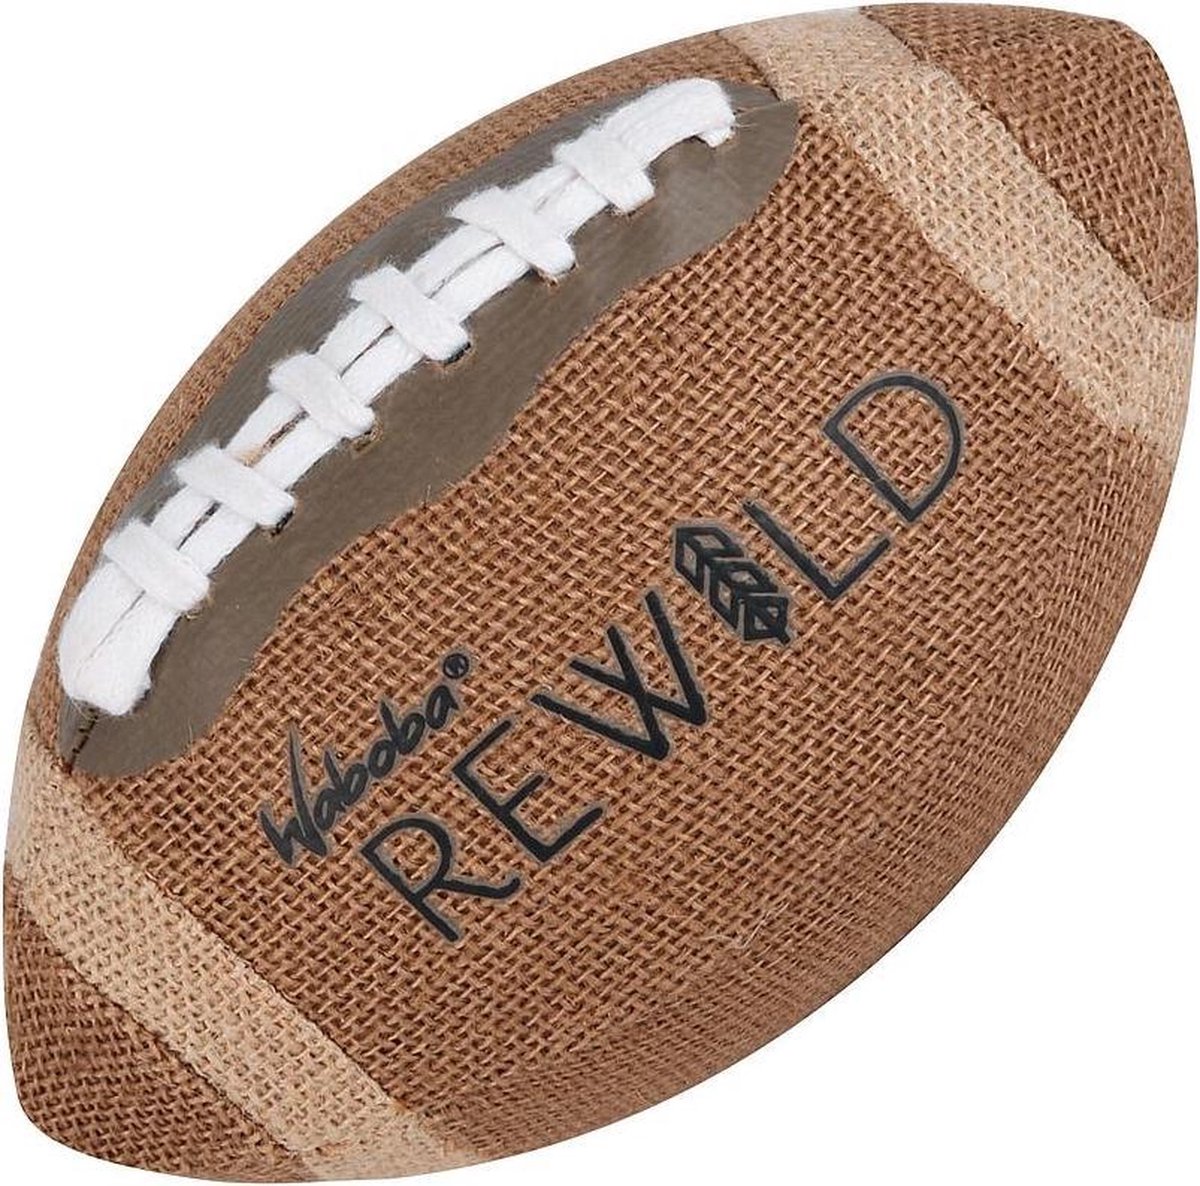 Waboba Rewild - Football 22cm (702001) /outdoor Toys /brown